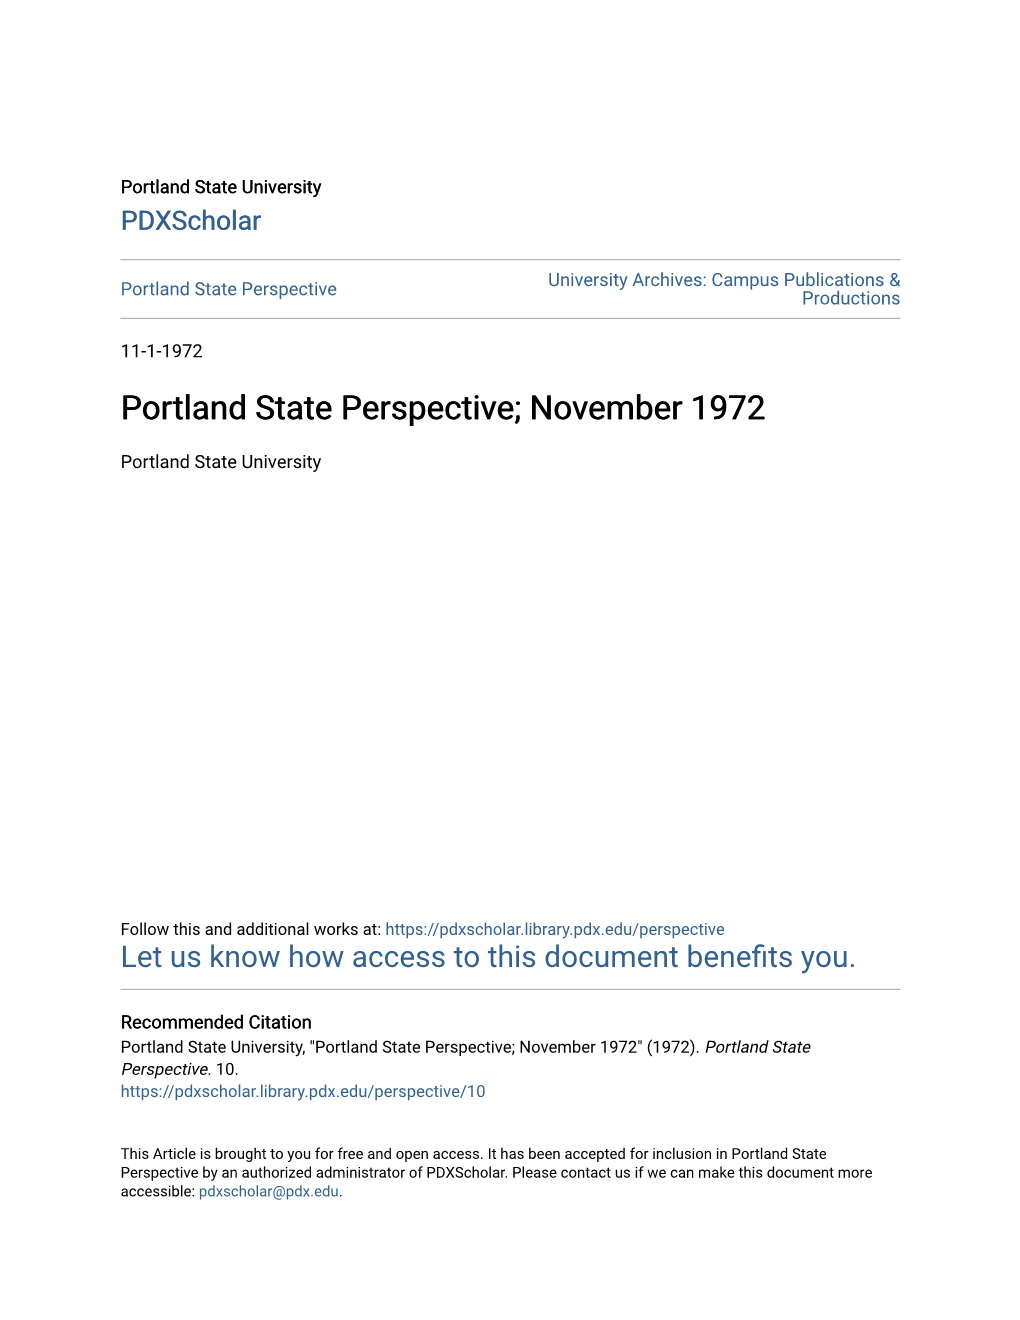 Portland State Perspective; November 1972